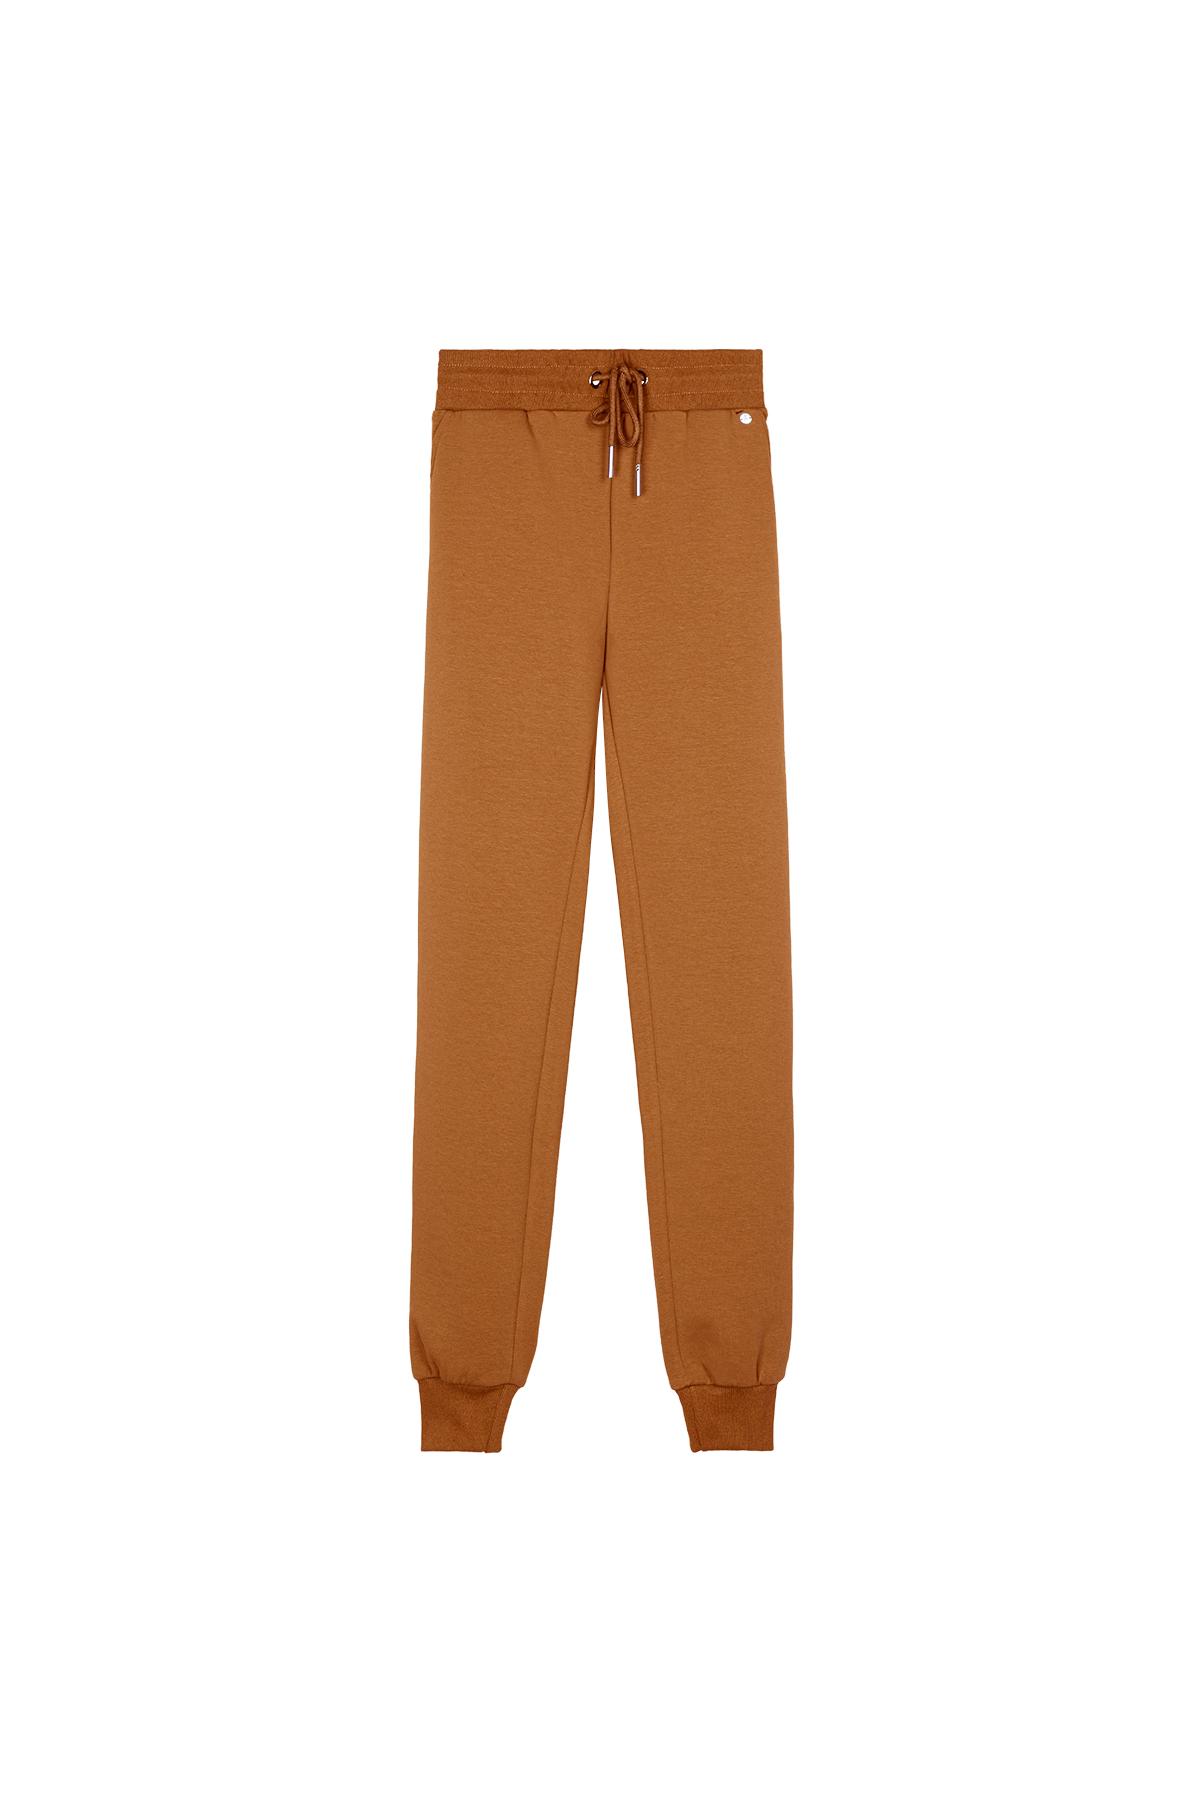 Comy pants loungewear Orange S h5 